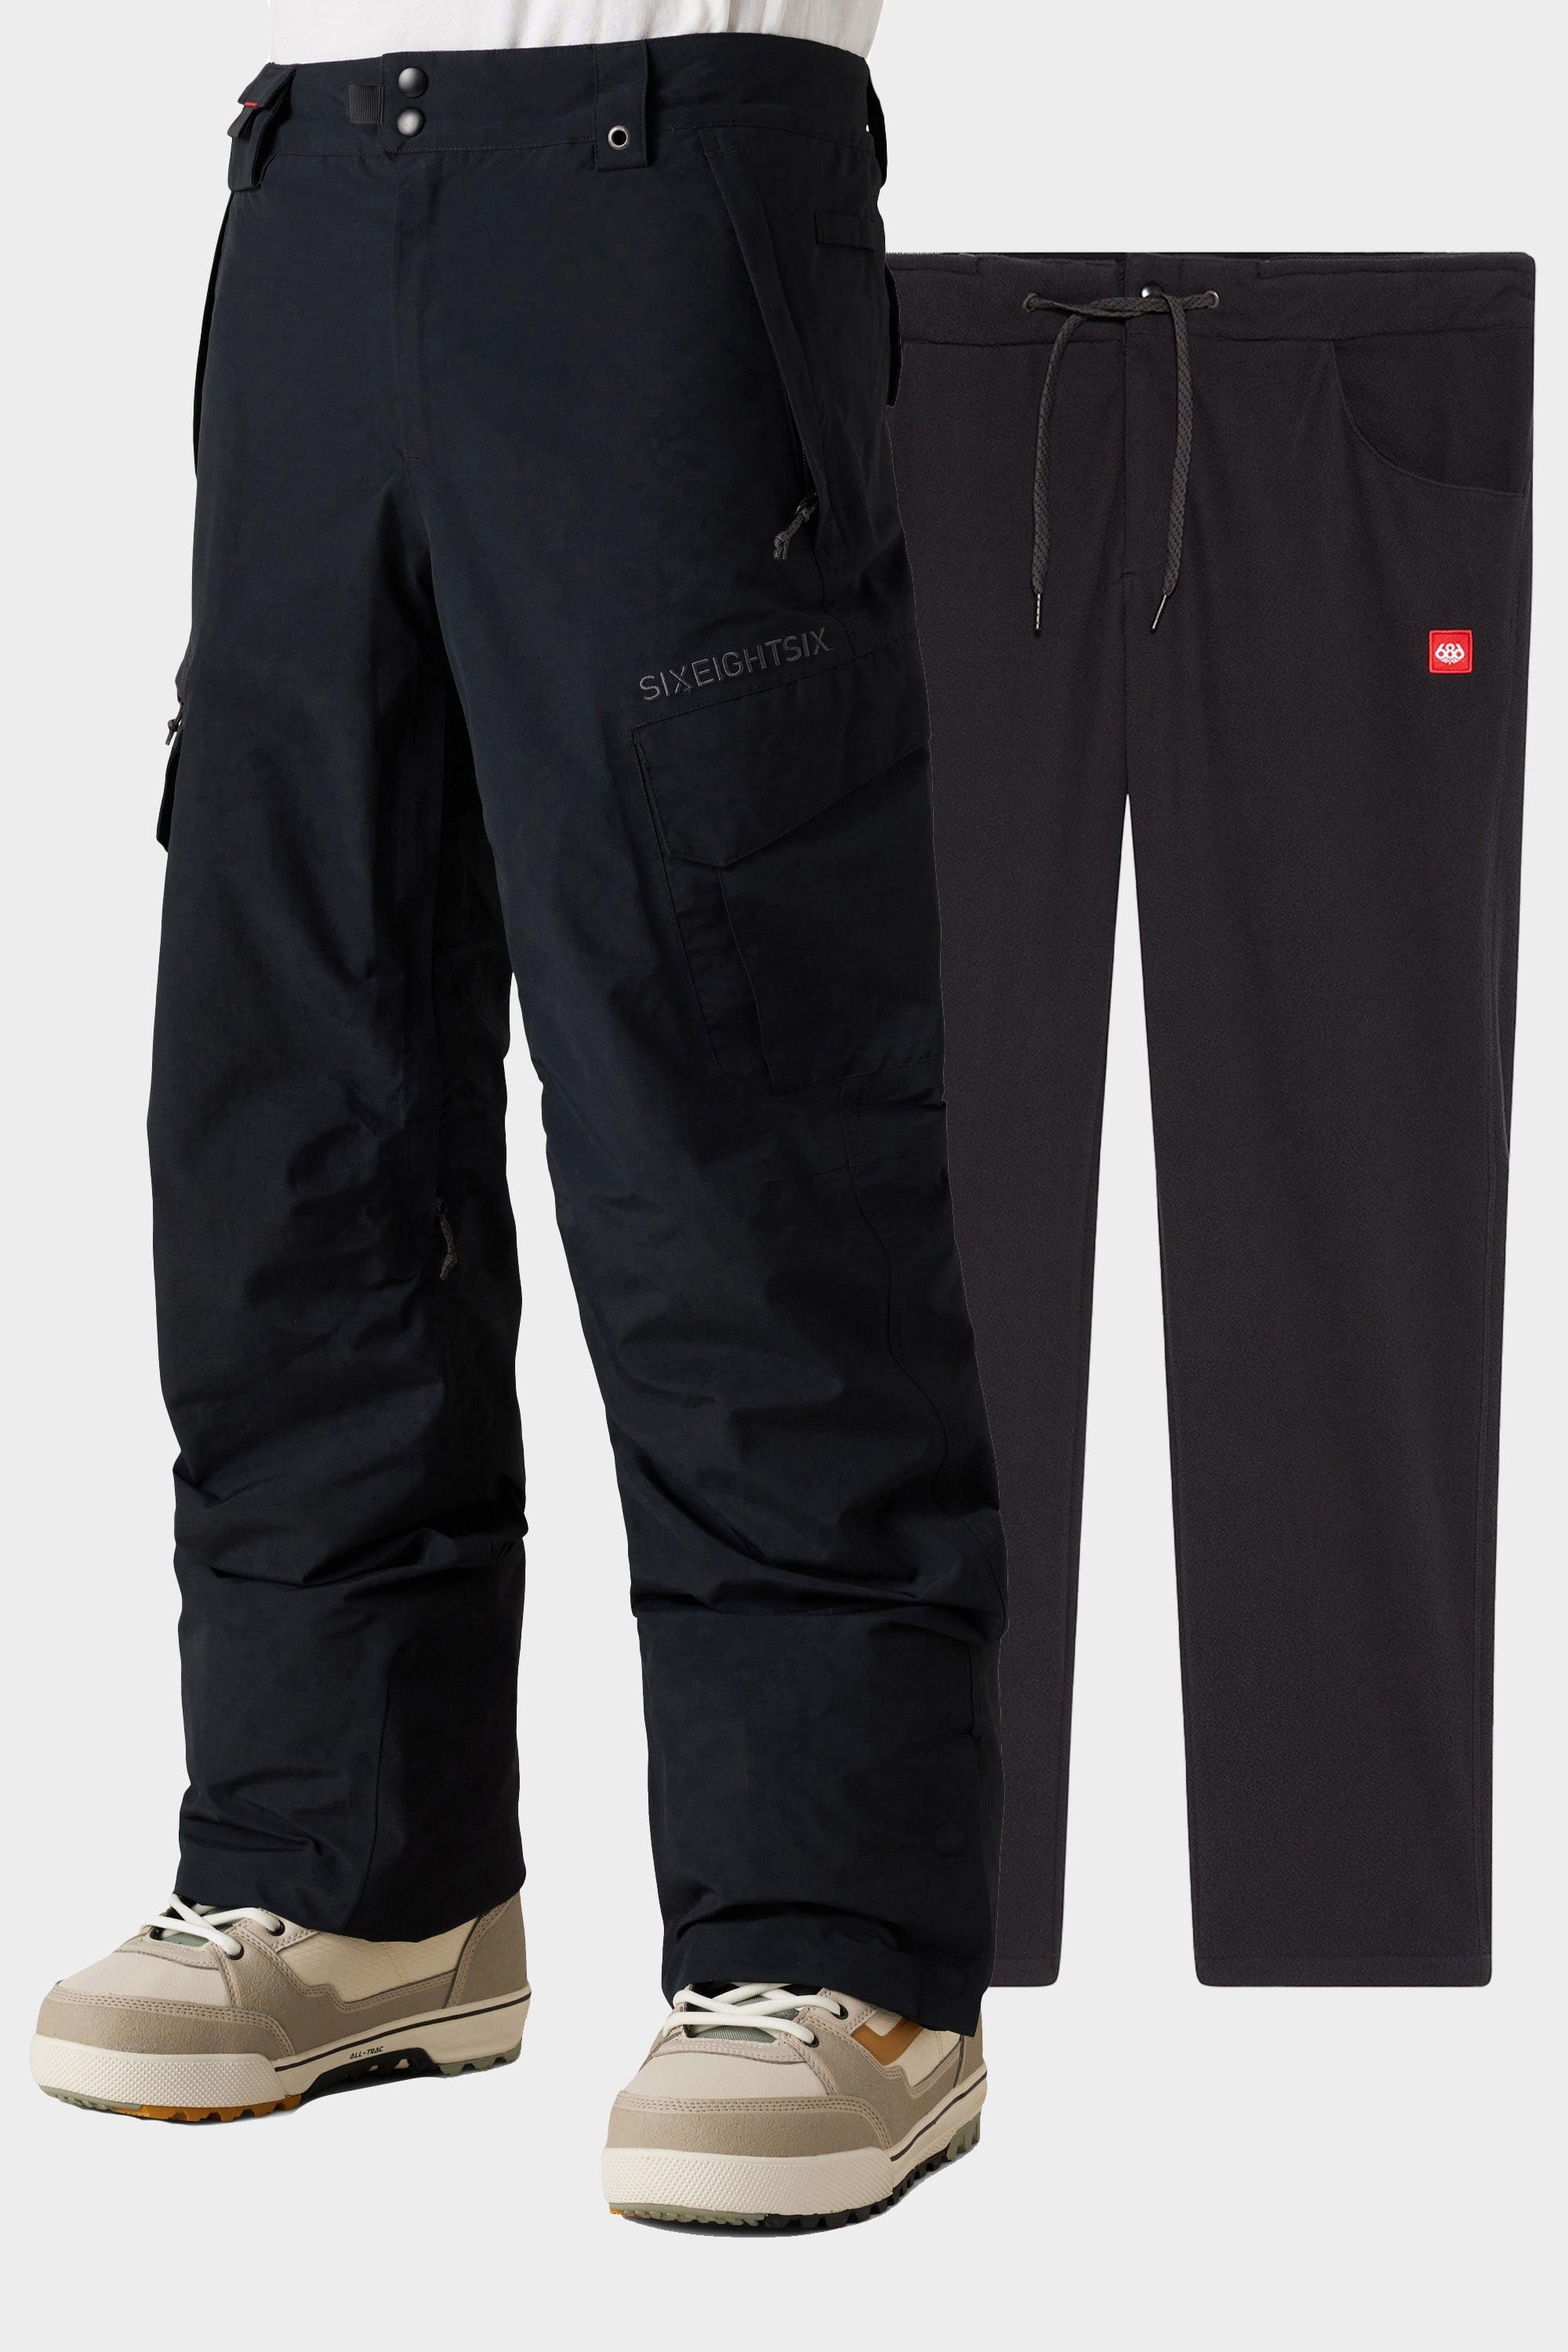 Men's Insulated Snowsports Cargo Pants - 36 Inseam